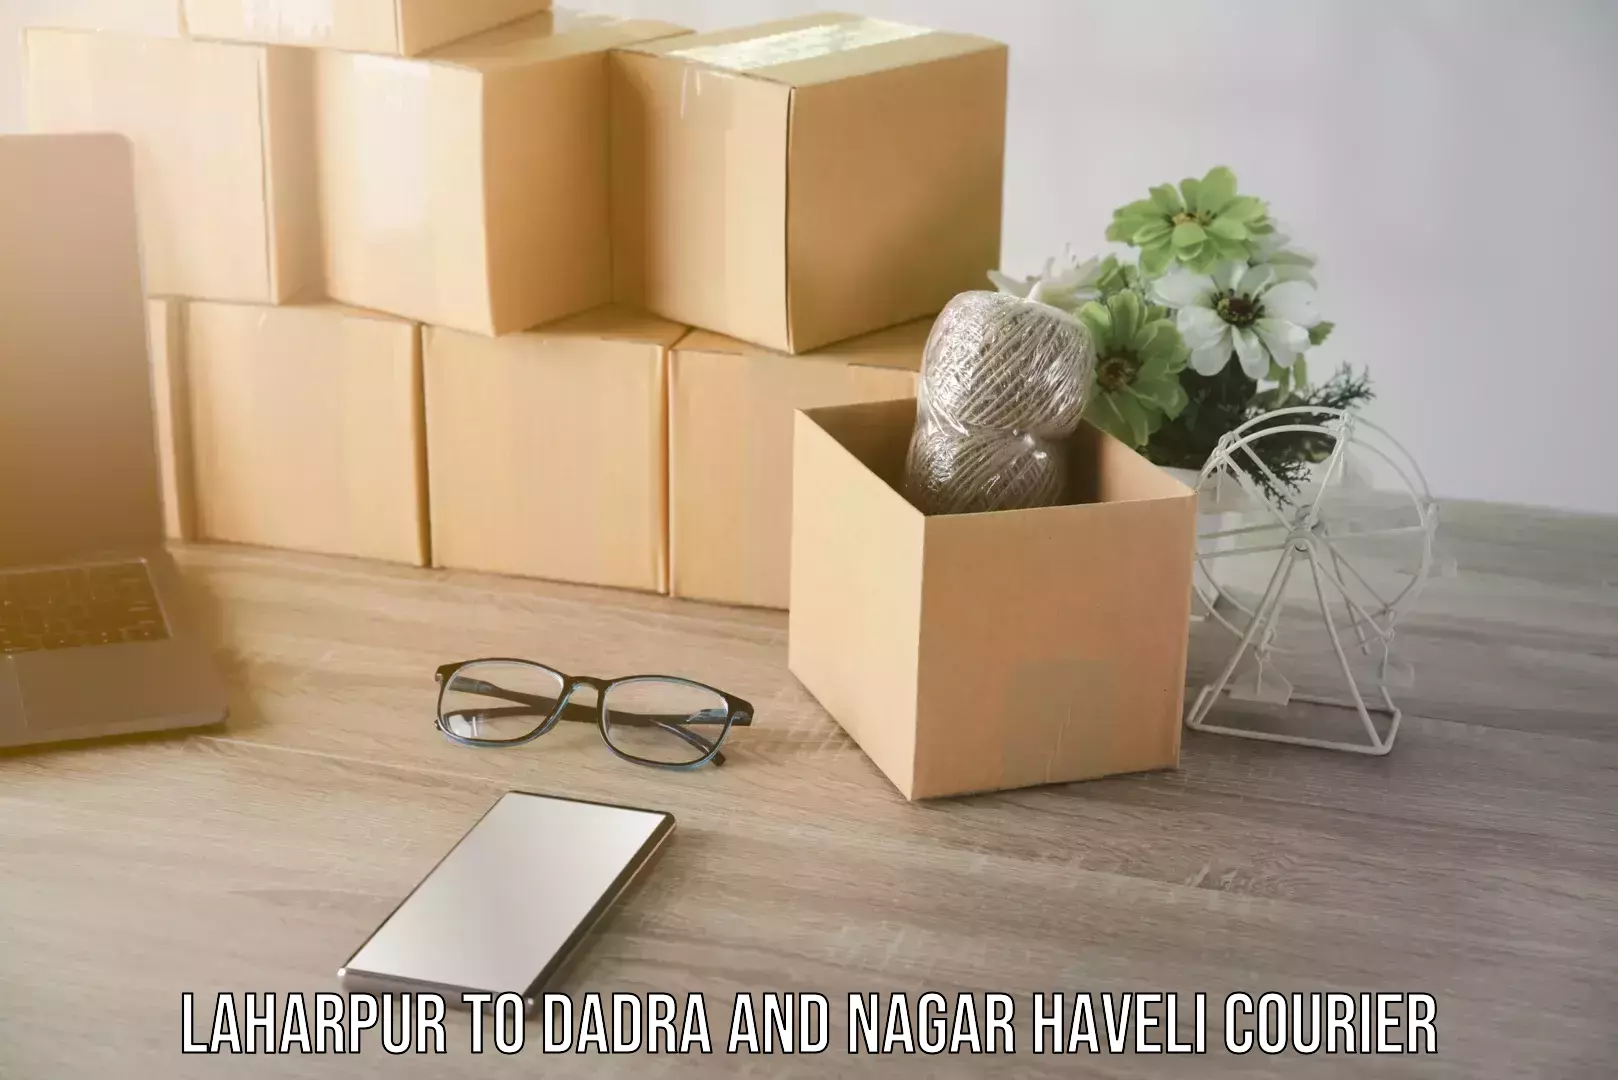 Home relocation experts Laharpur to Dadra and Nagar Haveli